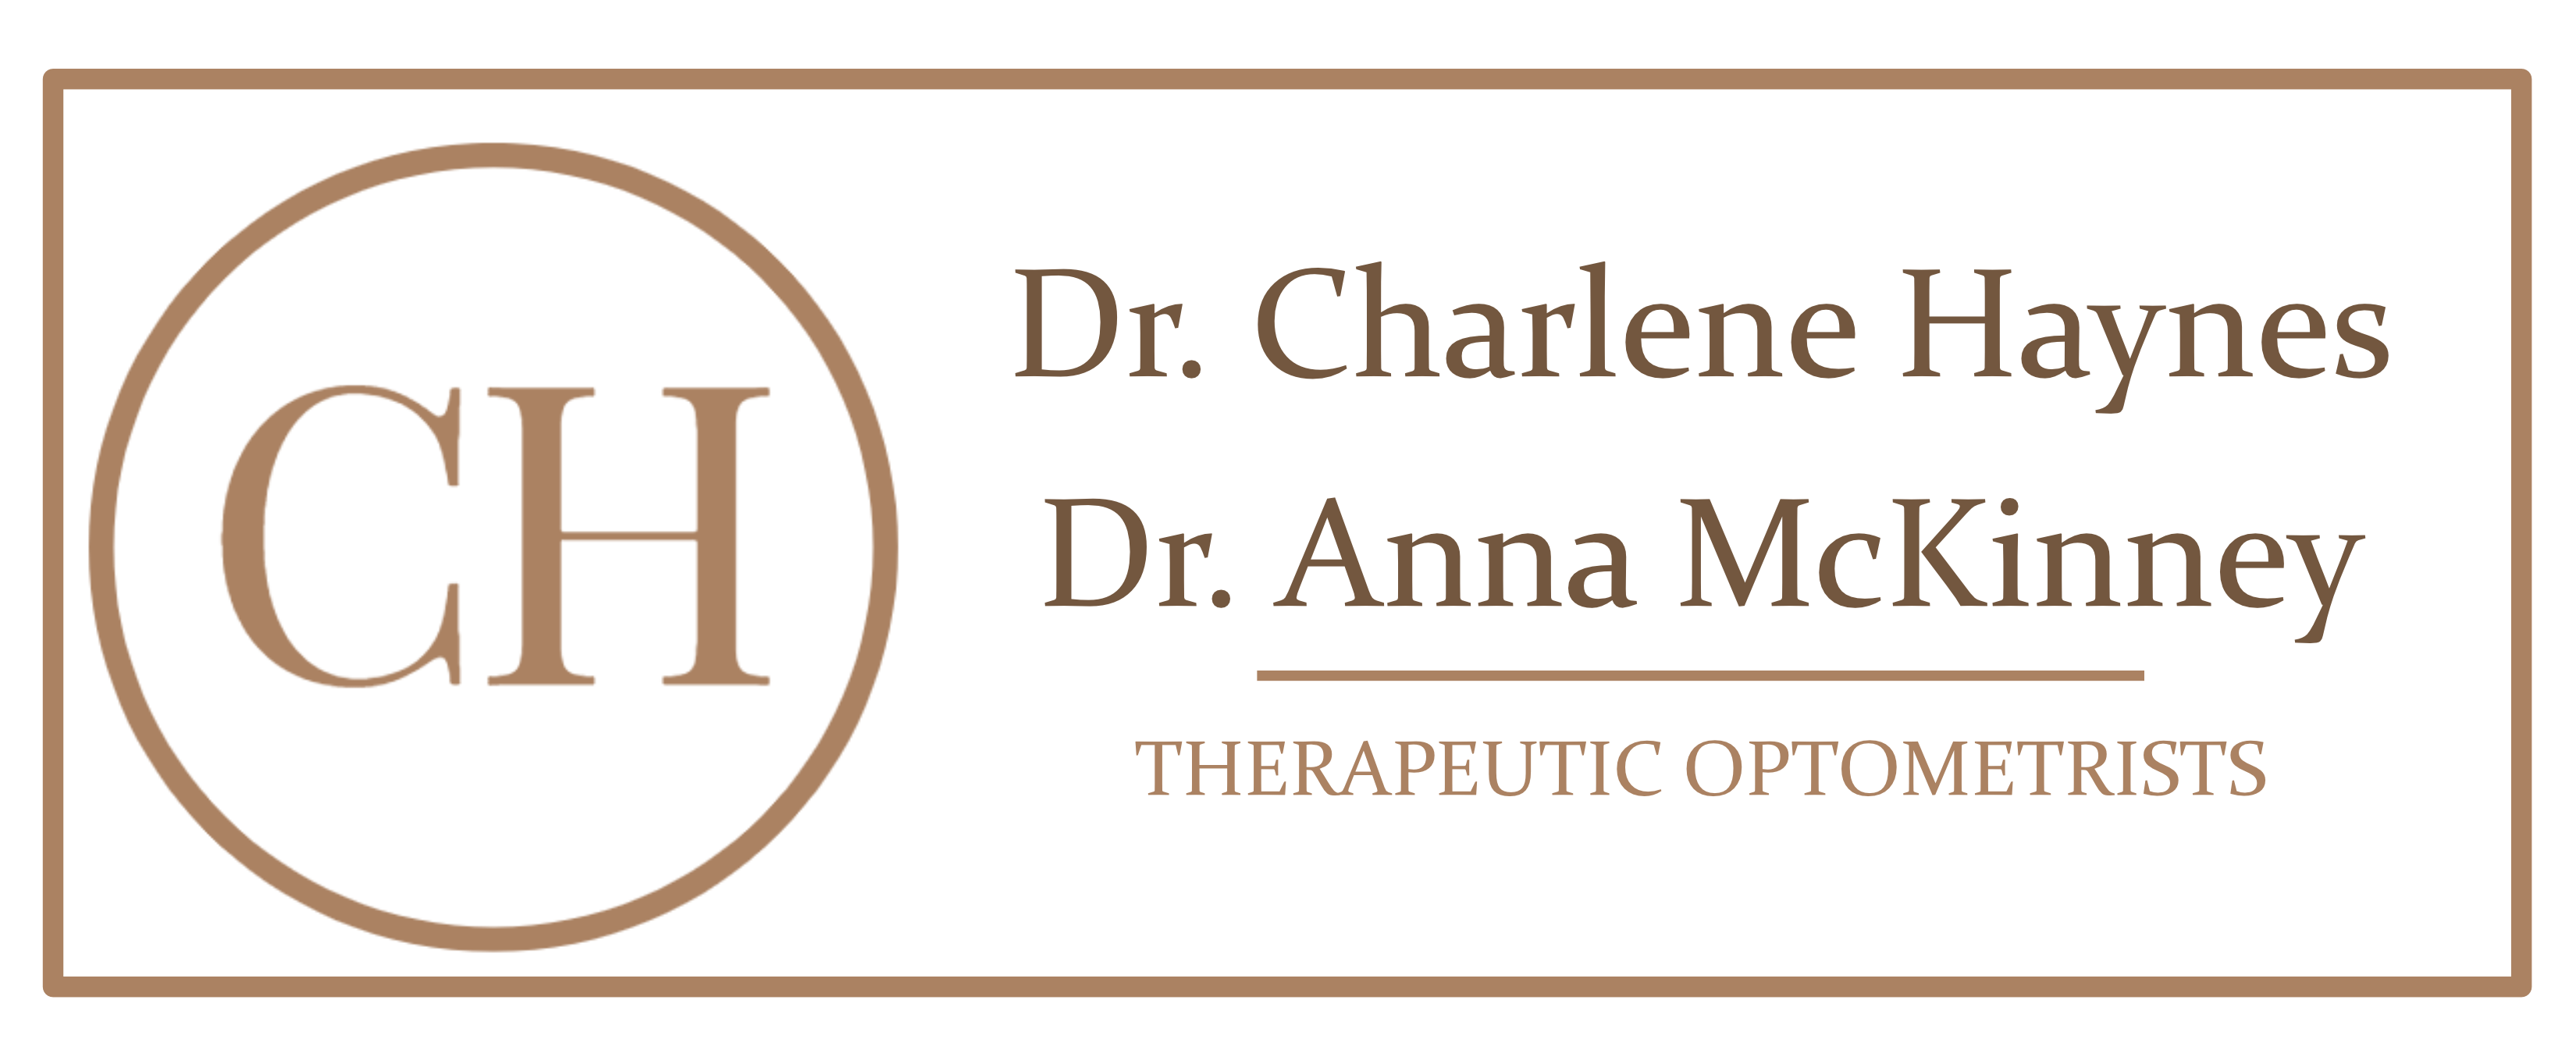 Dr. Charlene Haynes - Therapeutic Optometrist